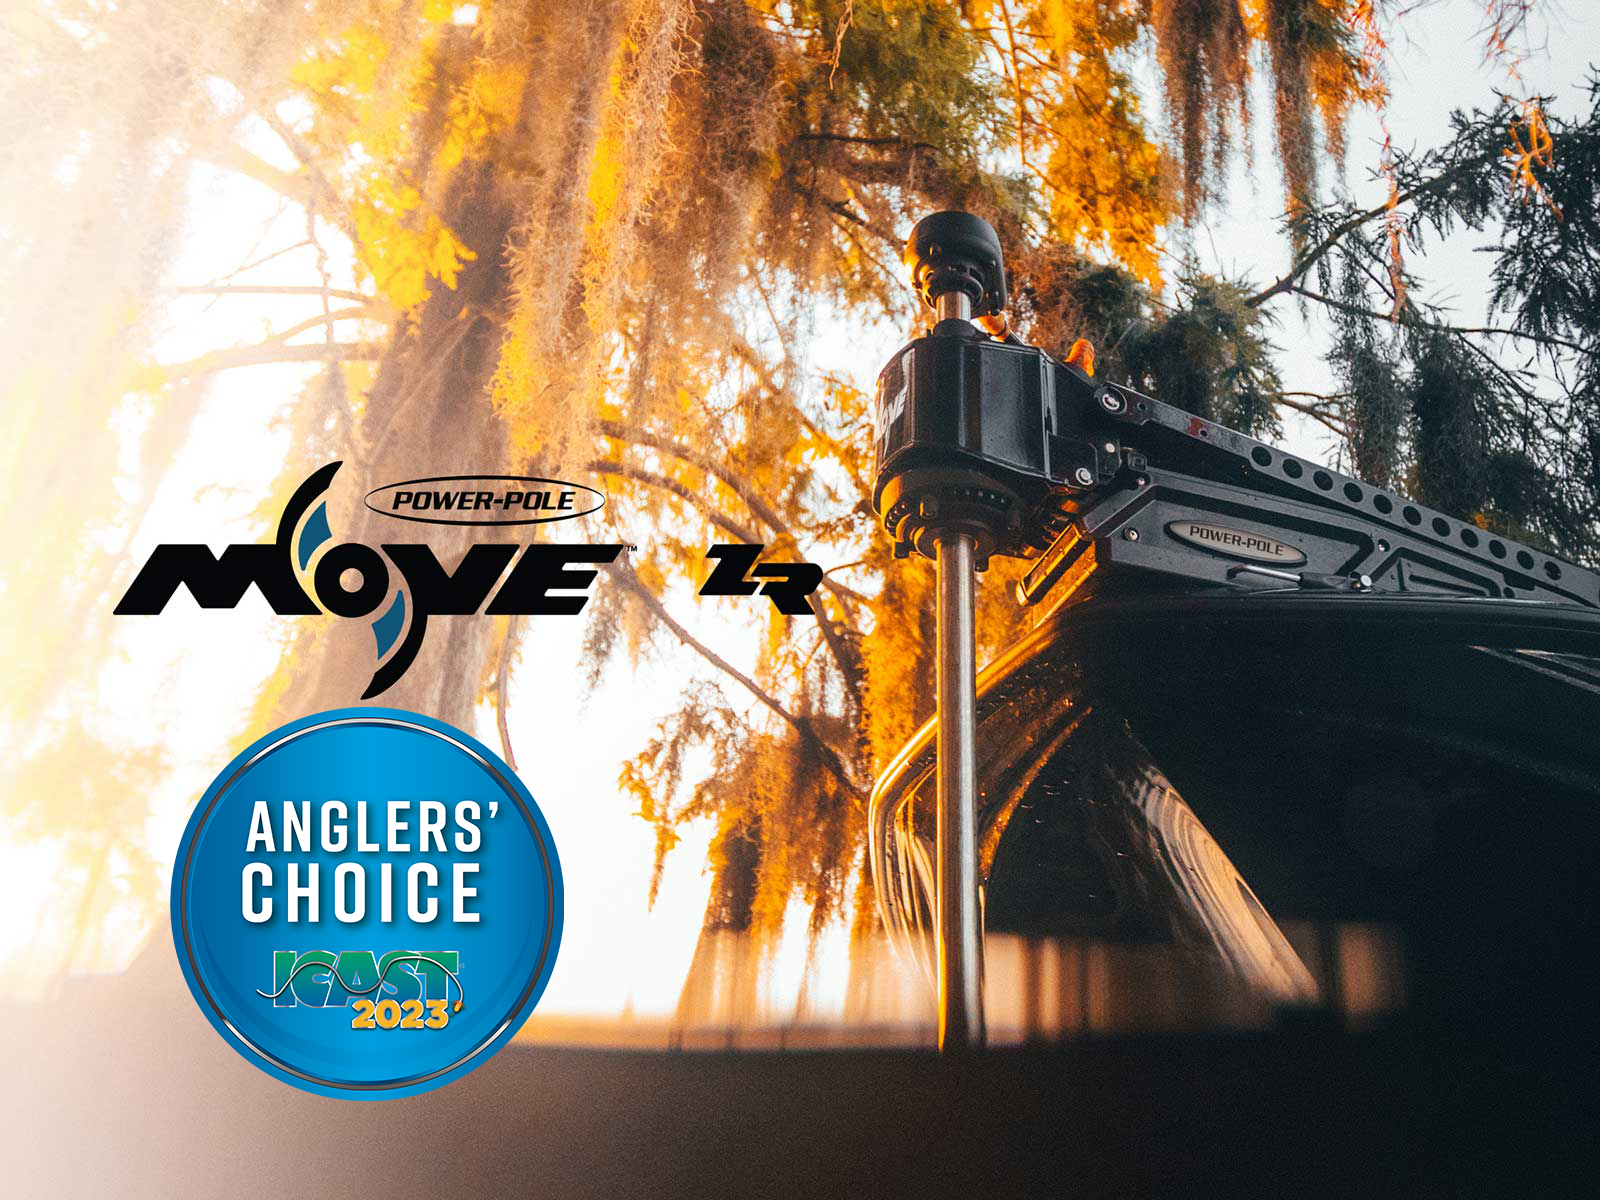 The Power-Pole Move ZR Wins the 2023 Anglers' Choice Award - ASA